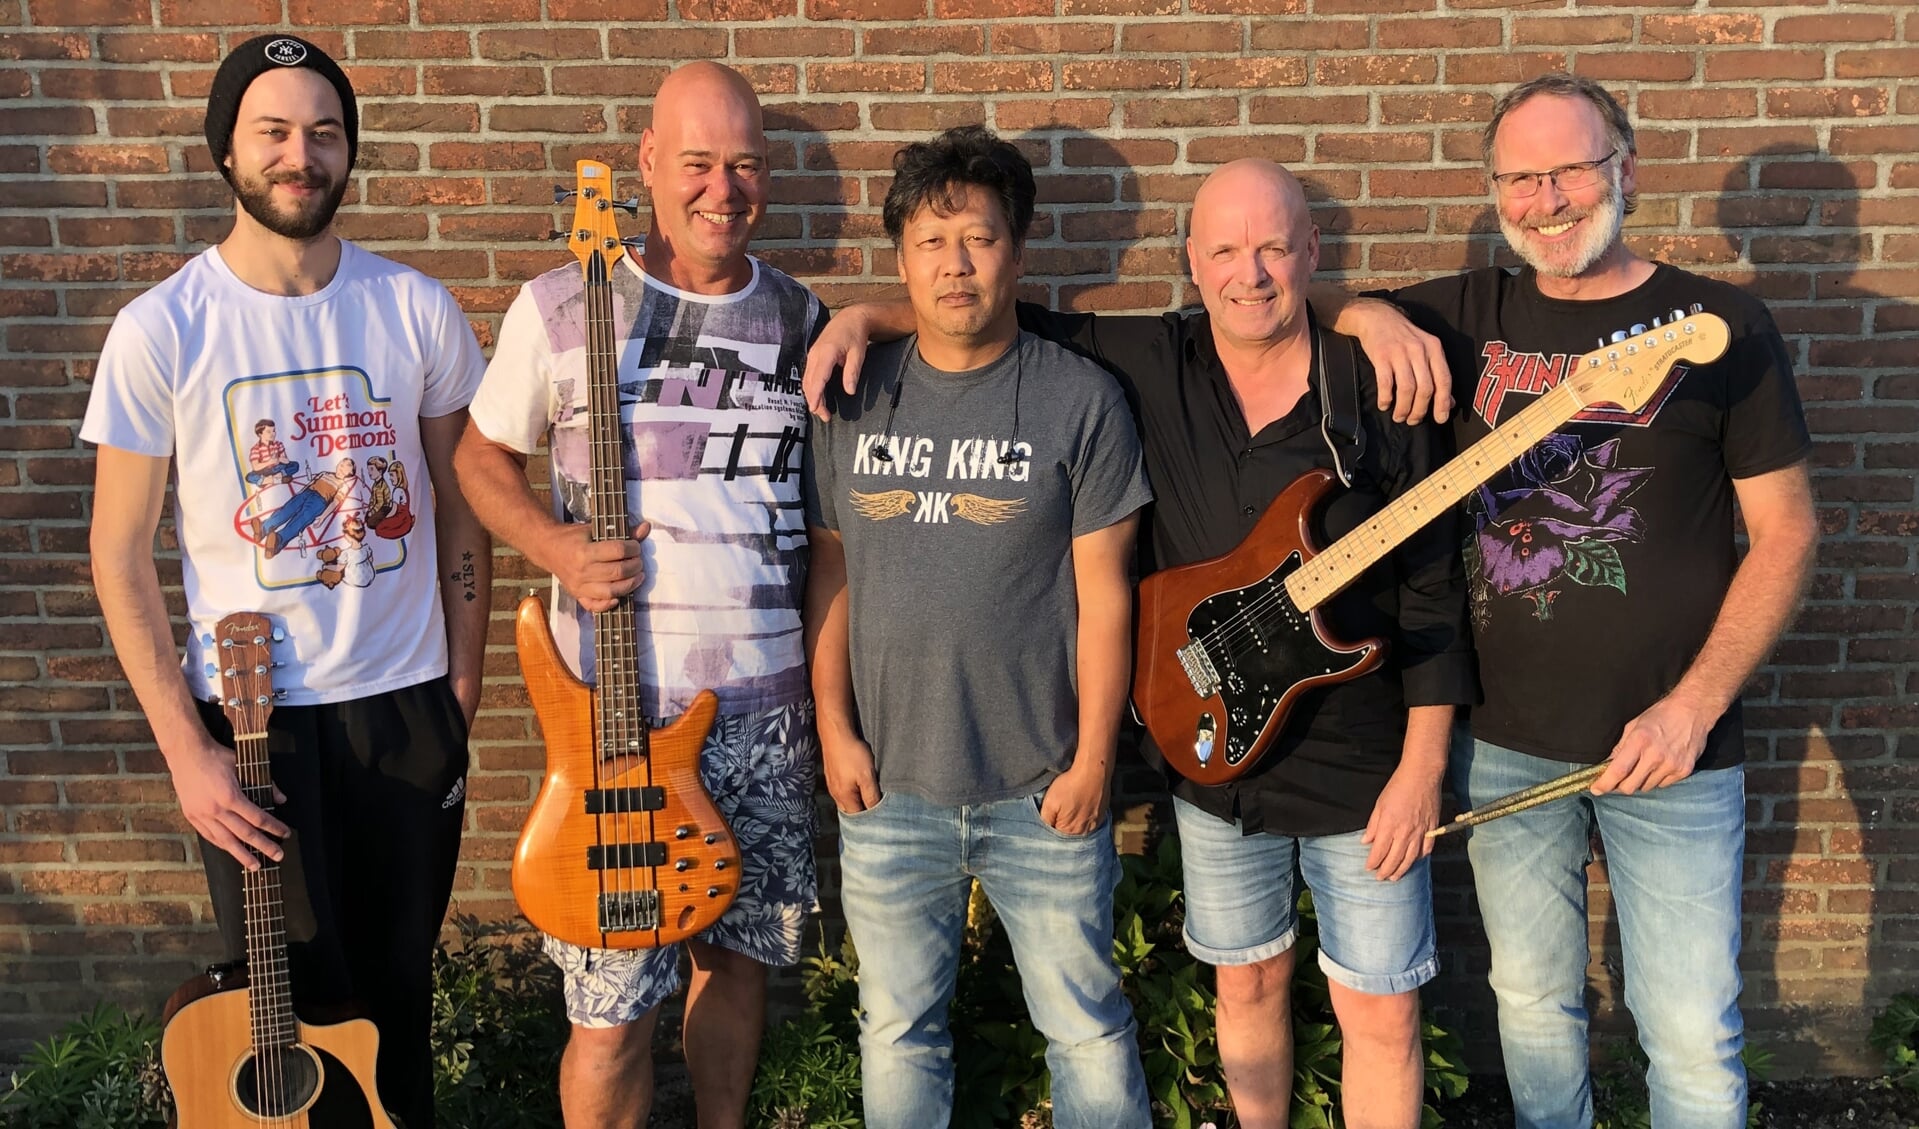 V.l.n.r. Daniel Verbaan (slag gitaar en vocals), Arjan Verbaan (bas gitaar en backing vocals), Patrick Chan (hoofd blèr-geitenbreier), Harold Uittenbosch (lead/solo gitaar), Rob Snel (drums en vocals).